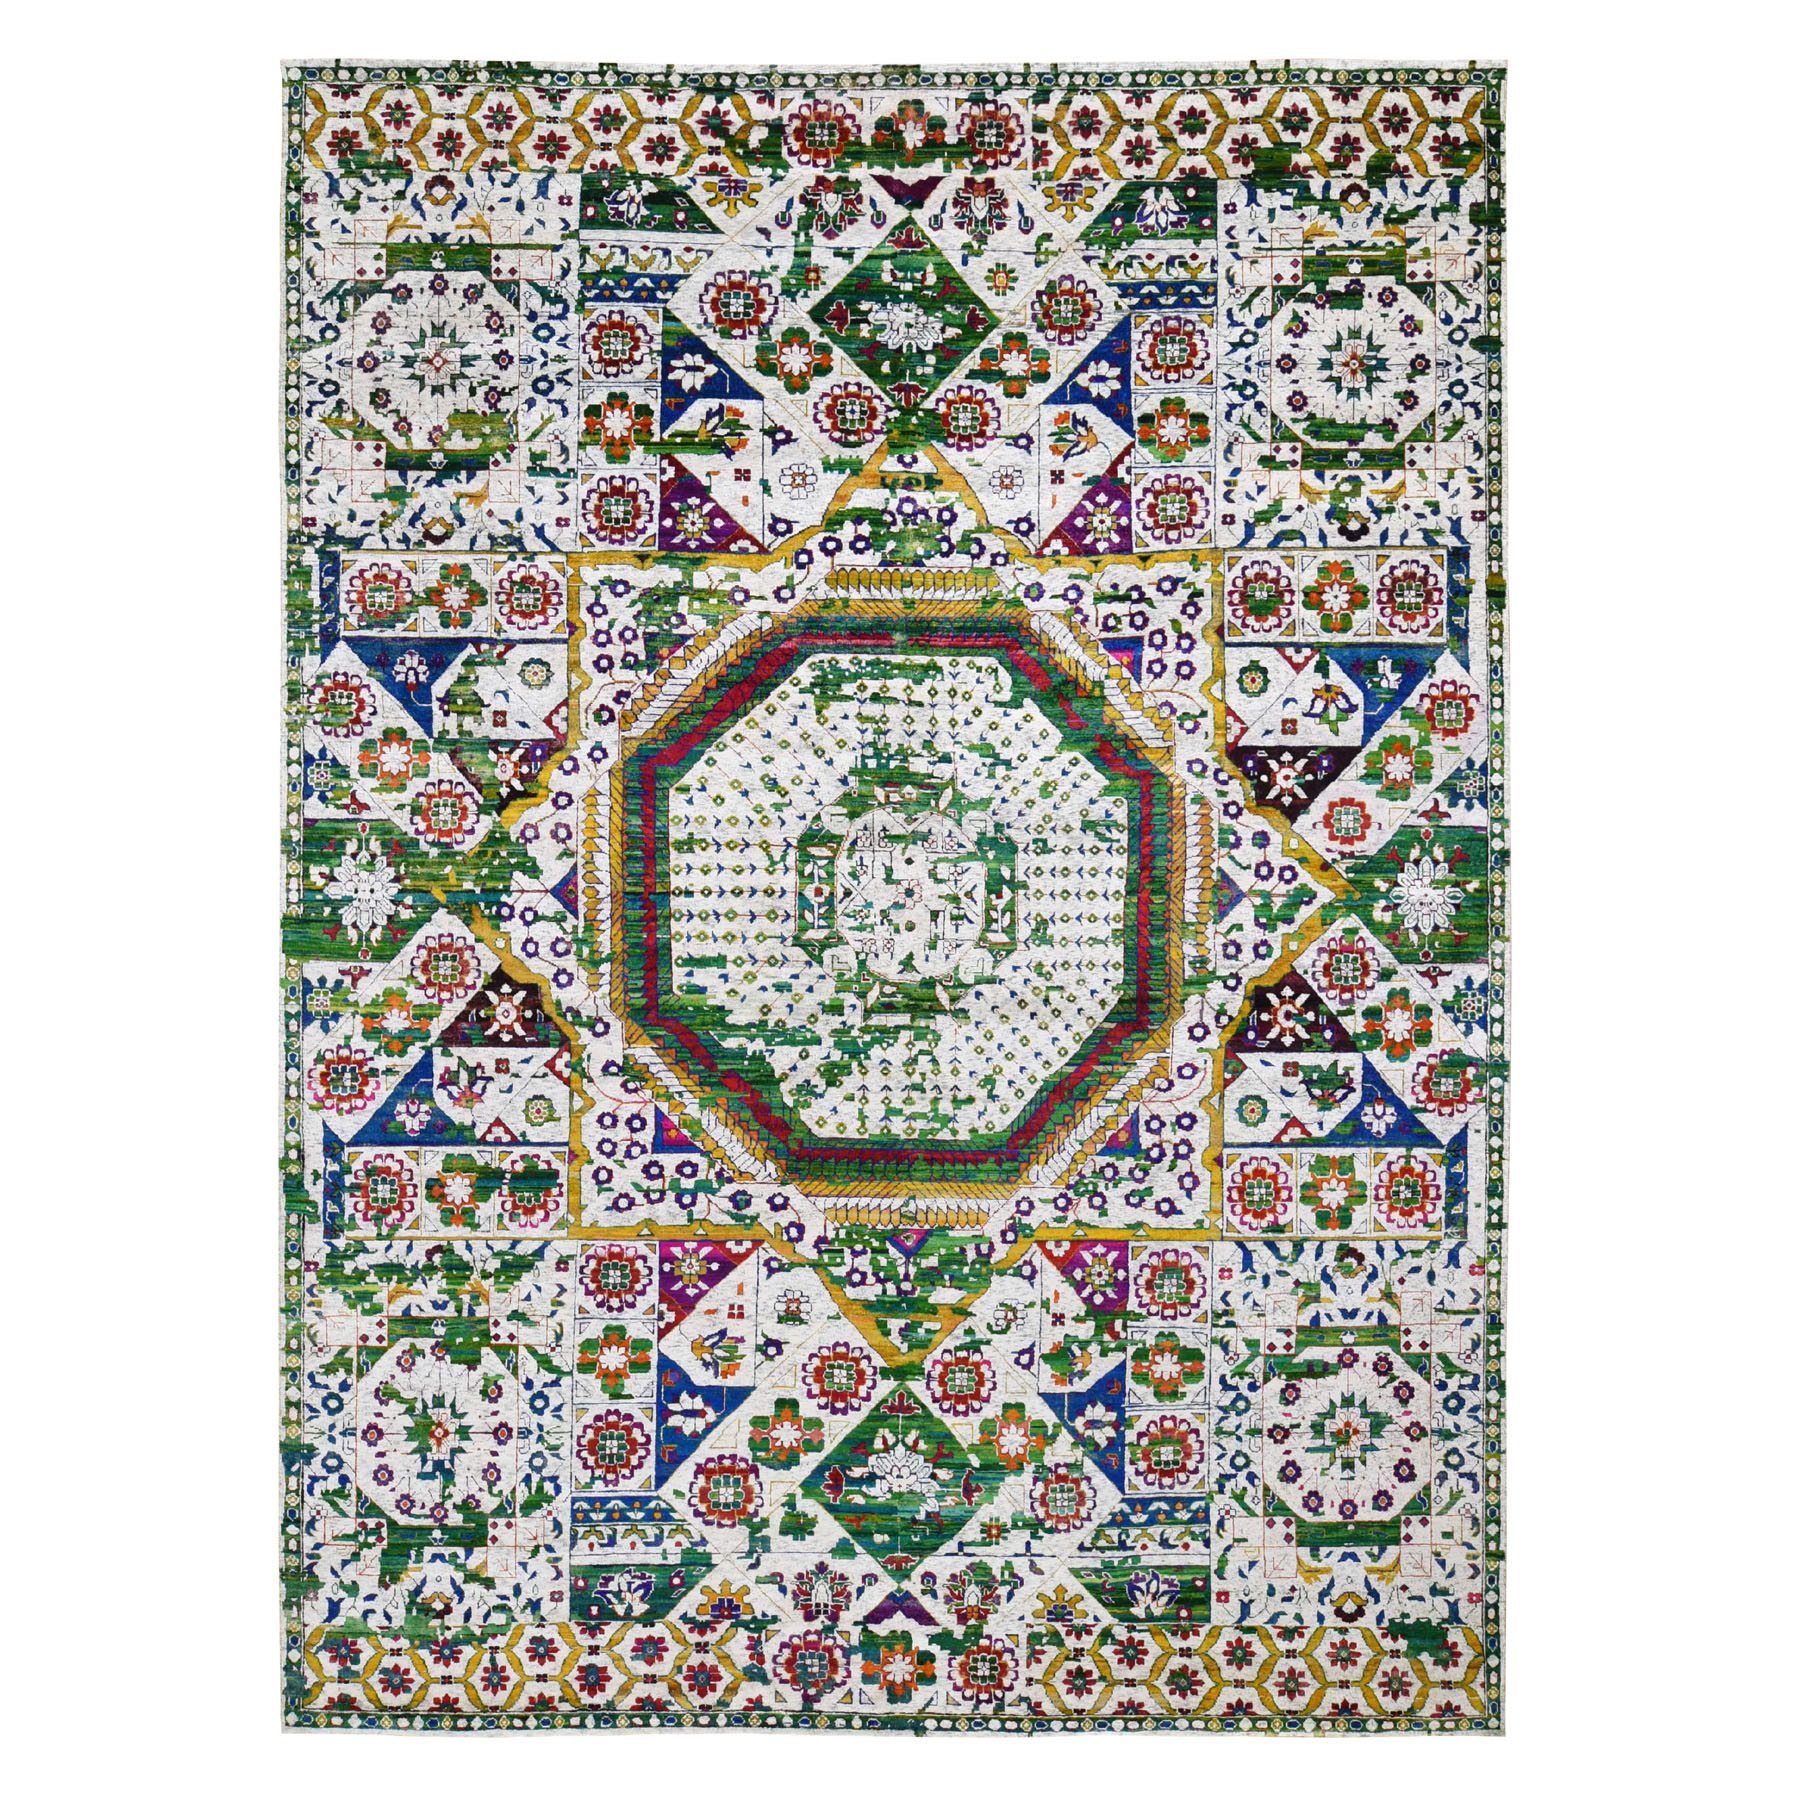 9'x12'1" Colorful Sari Silk Mamluk Design Hand Woven Oriental Rug 